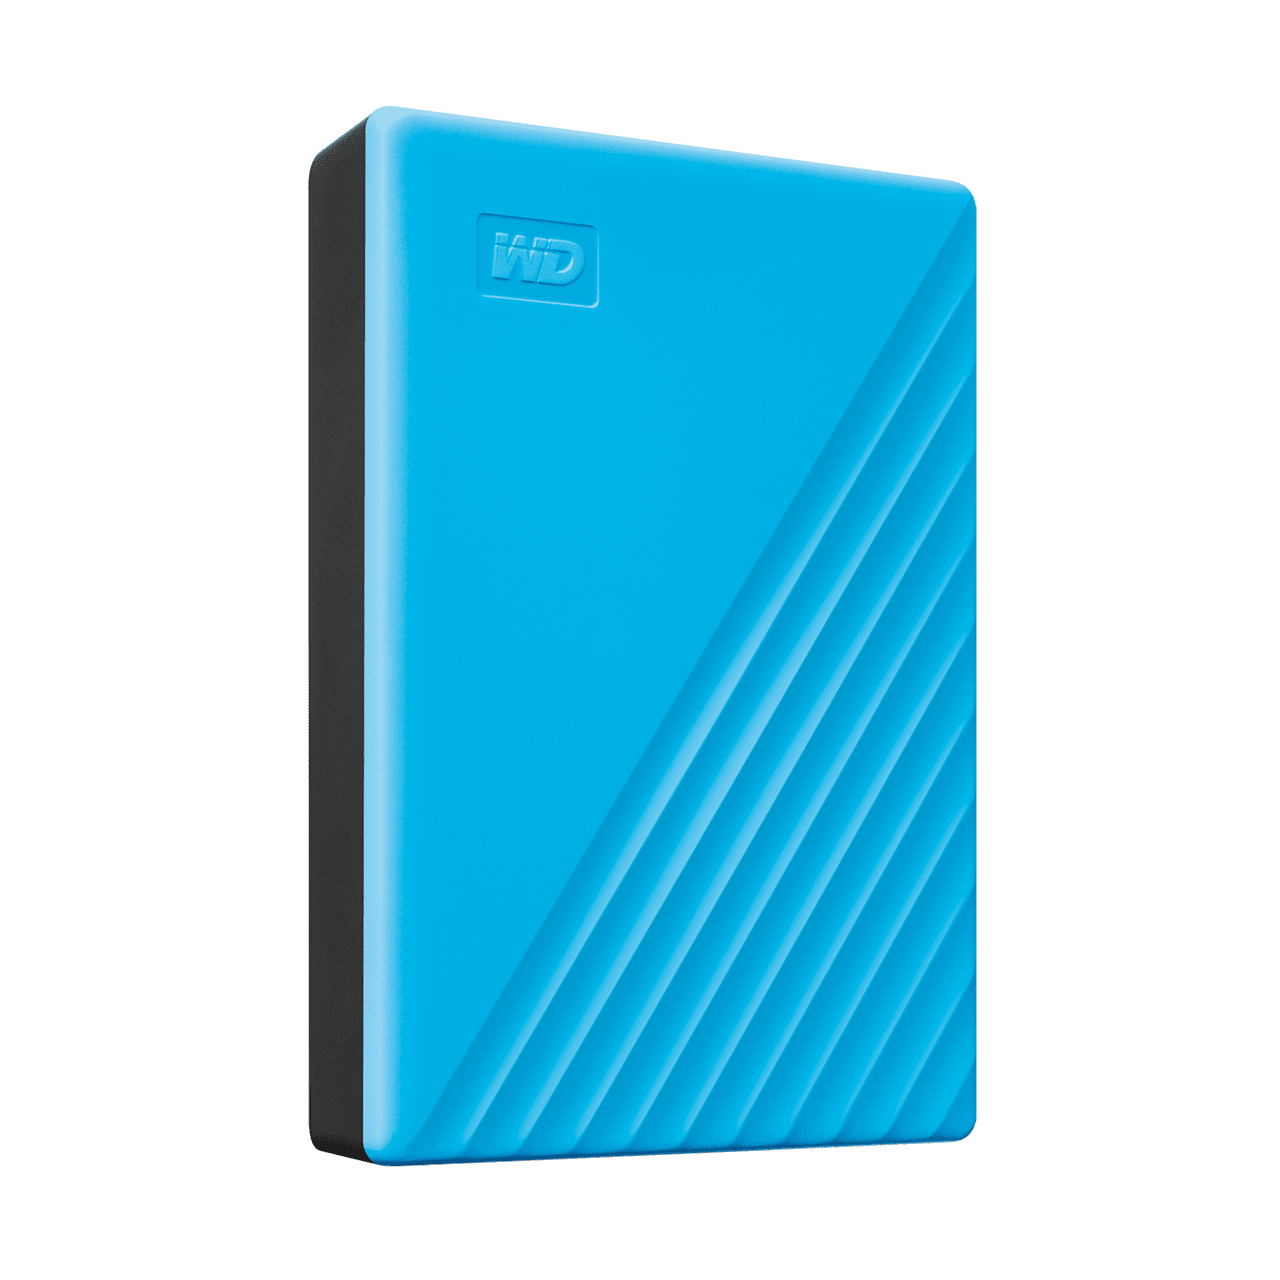 WD MyPassport 4Tb 可攜式外置硬碟 (藍色)